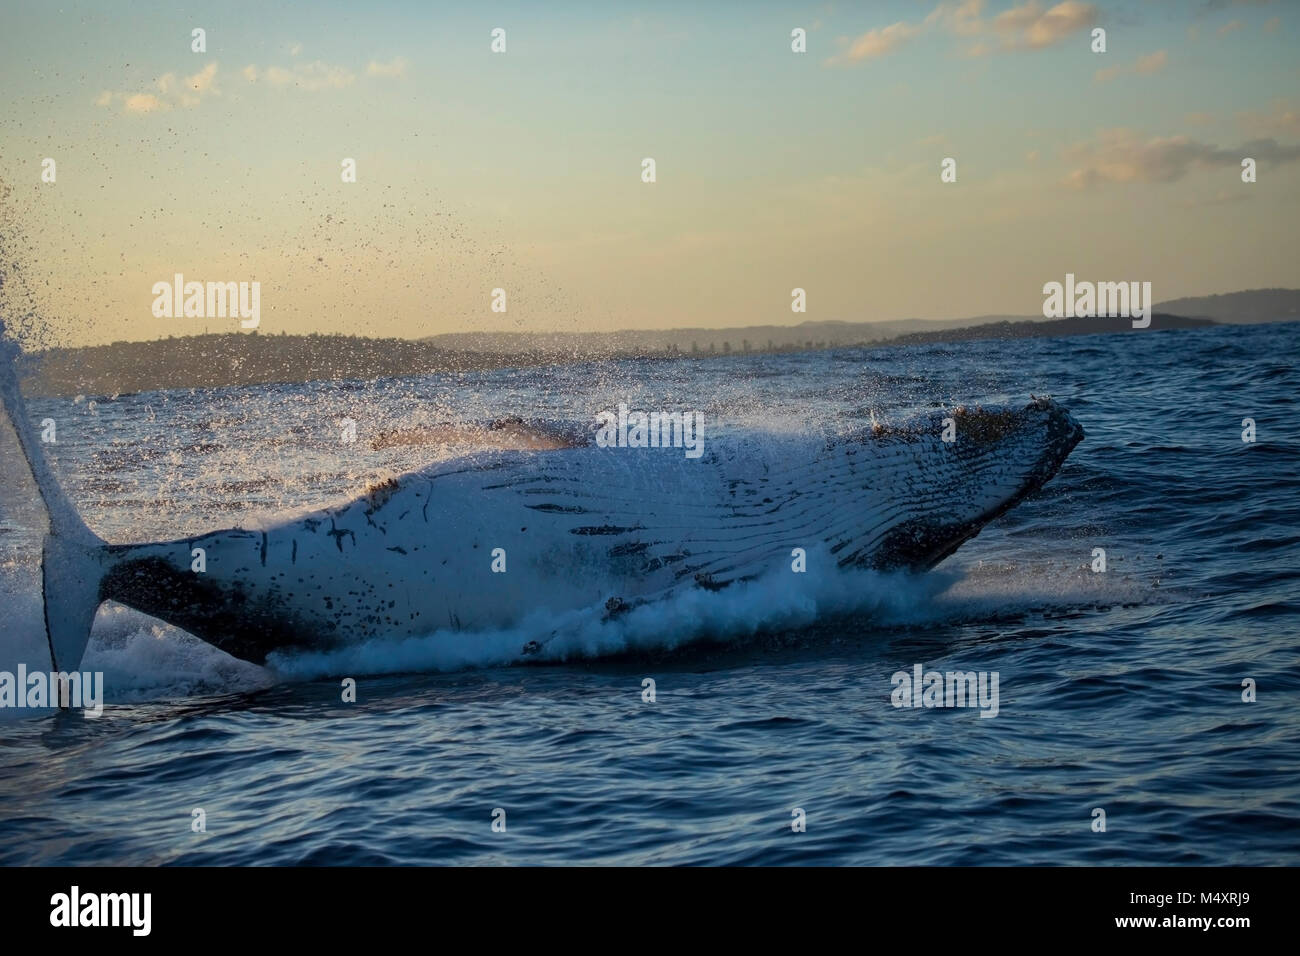 Humpback whale airborne breach aftermath, Sydney Australia Stock Photo